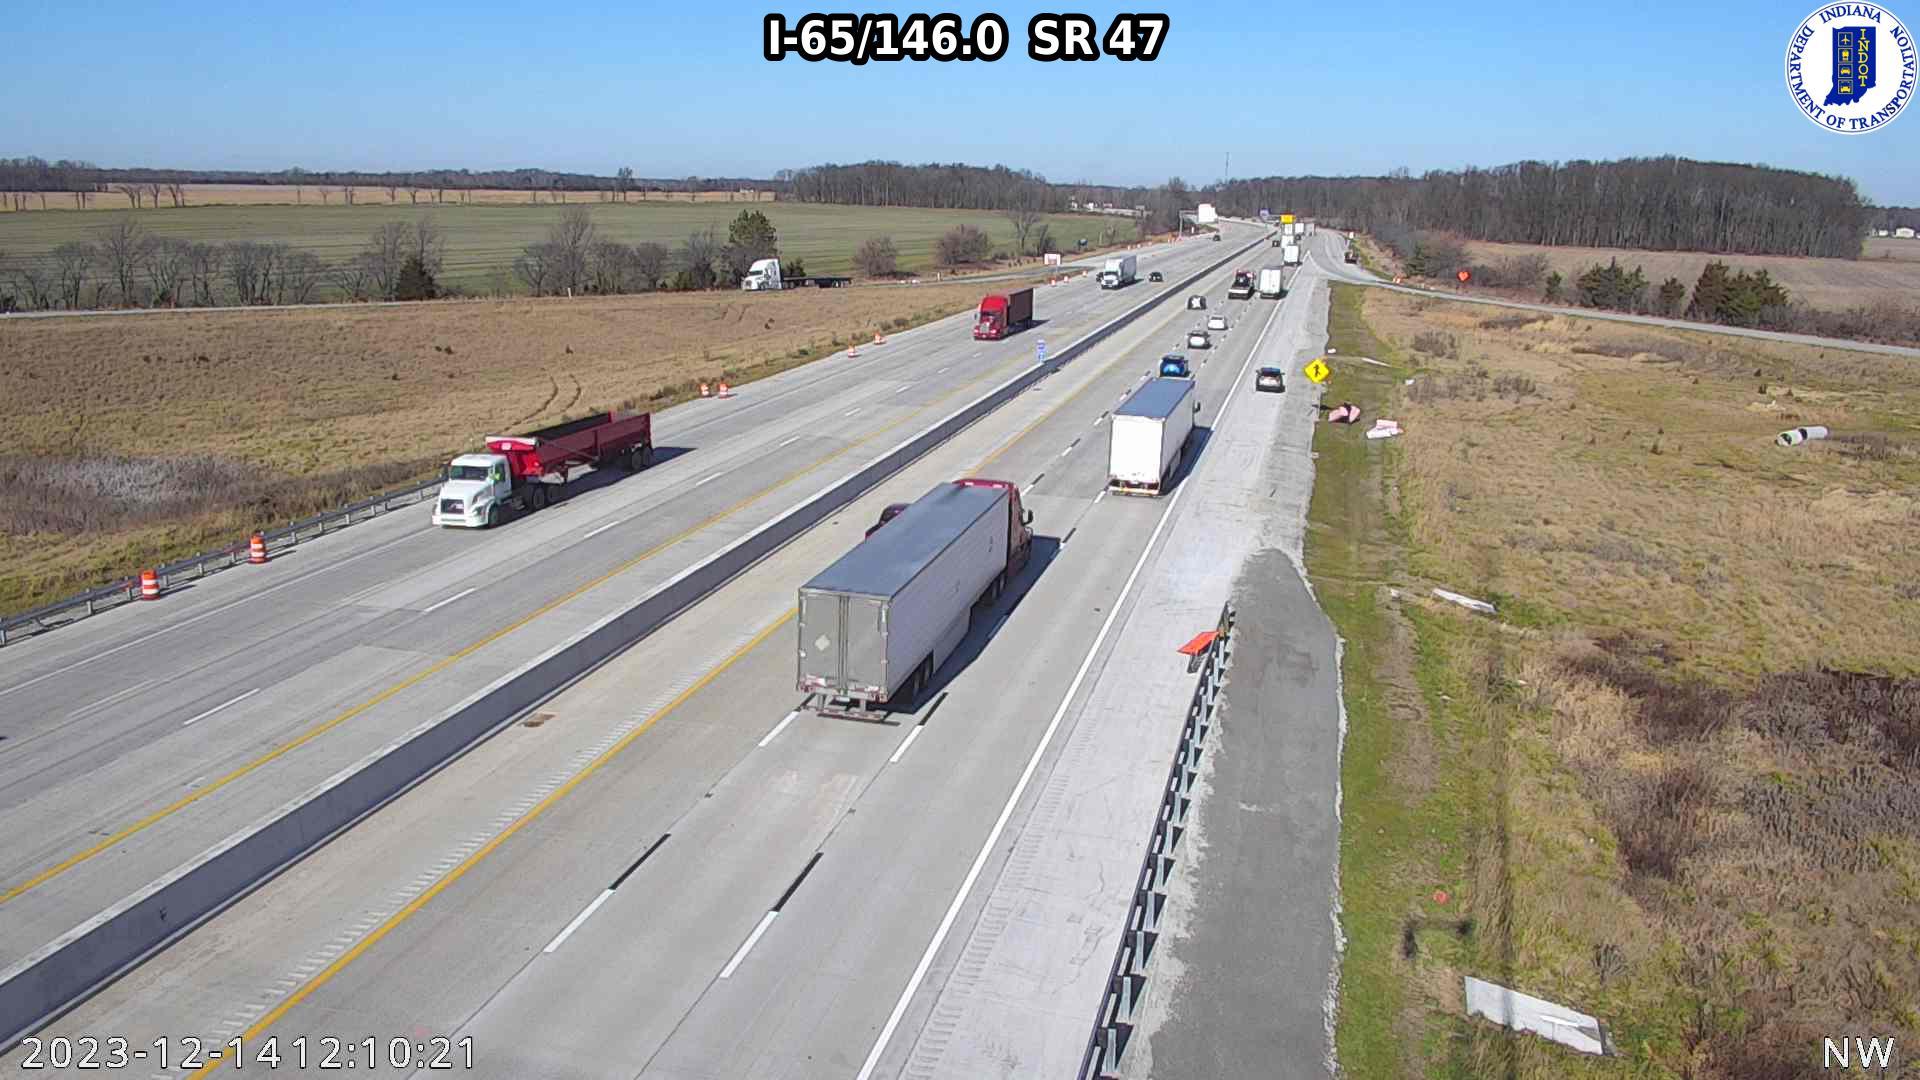 Pike: I-65: I-65/146.0 SR Traffic Camera